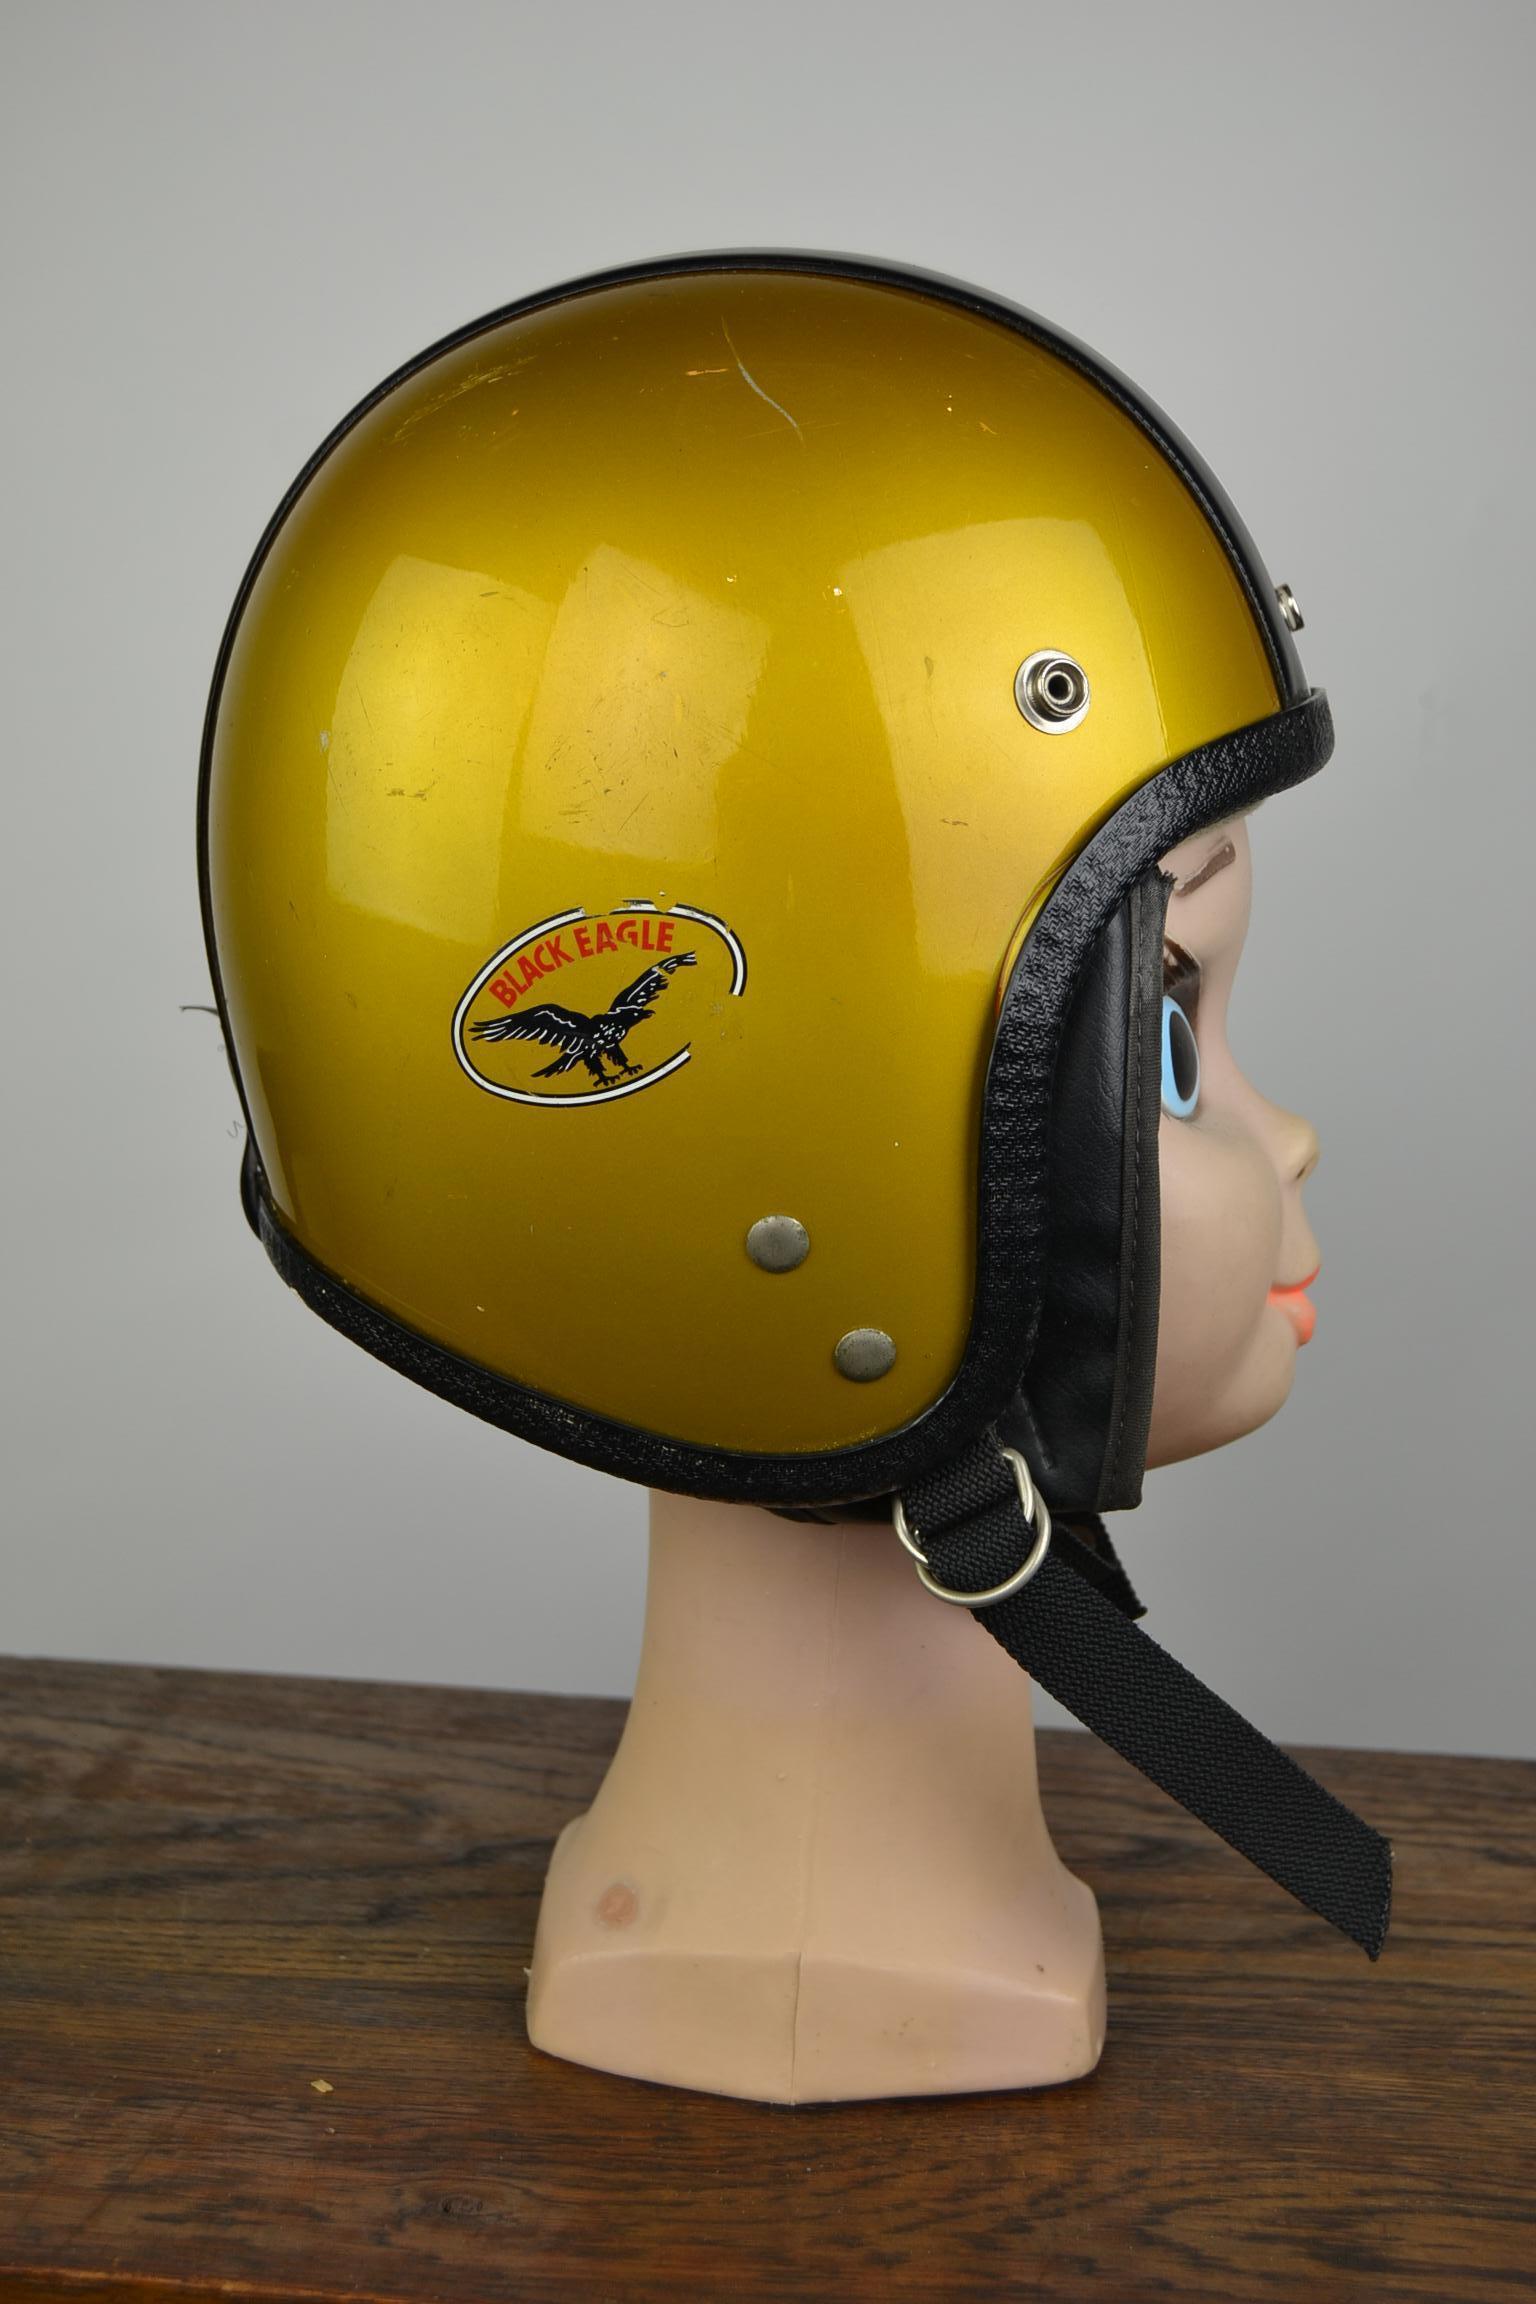 Vintage Benor motorbike helmet, crash helmet.
This golden glitter helmet has a black eagle logo on the side.
The inside of this helmet is still very clean and has number NBN 626 – 63 – 430706.
Retro motorbike, motorcycle, café racer helmet from